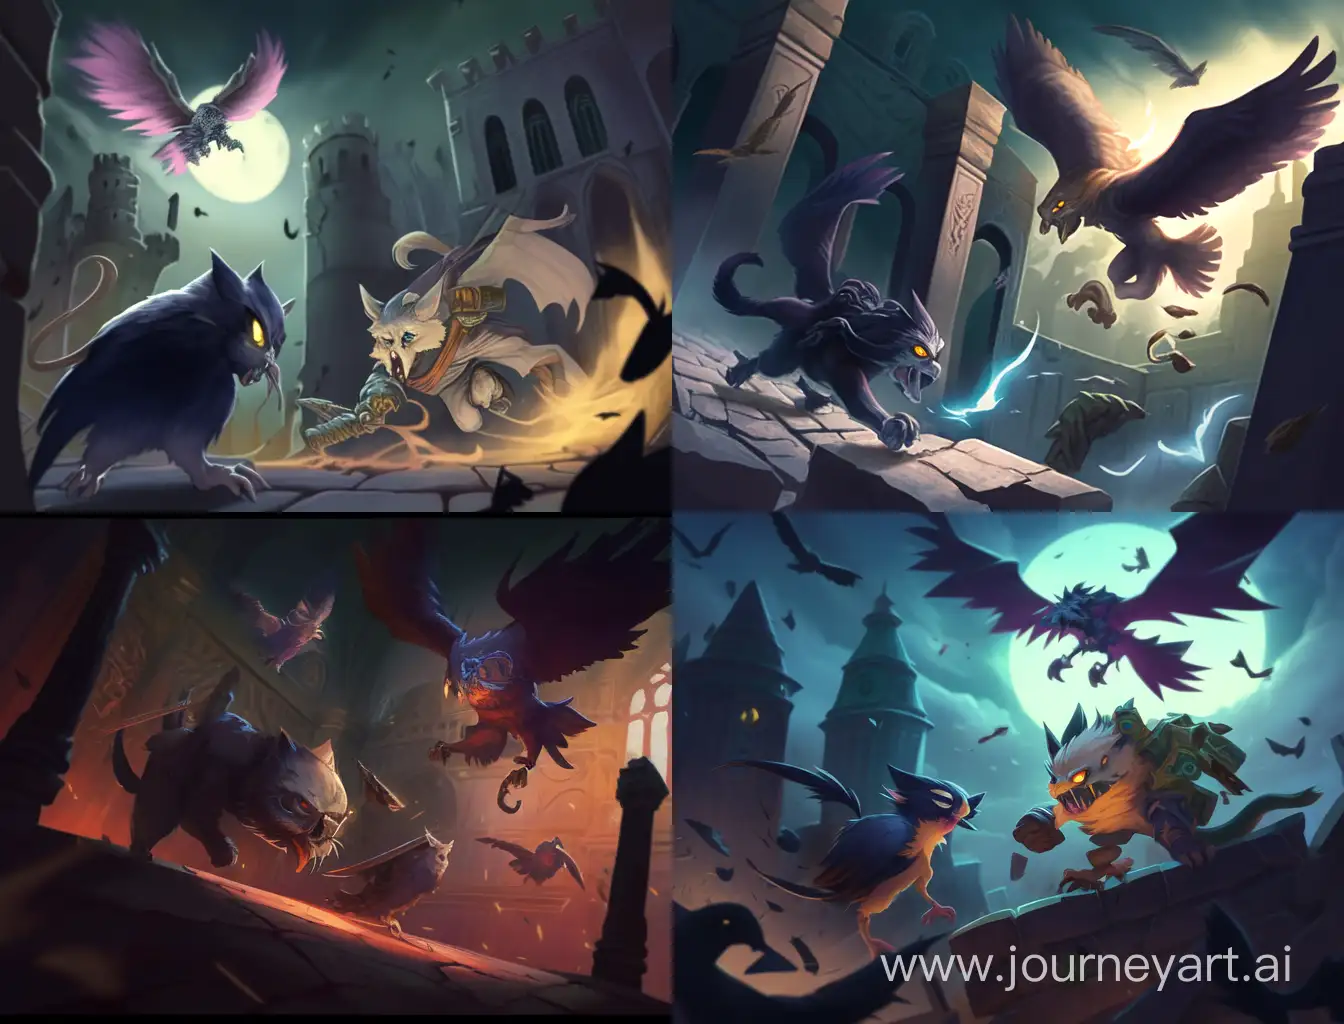 Epic-Dark-Fantasy-Battle-Rat-and-Owl-Warriors-in-Ancient-City-Ruins